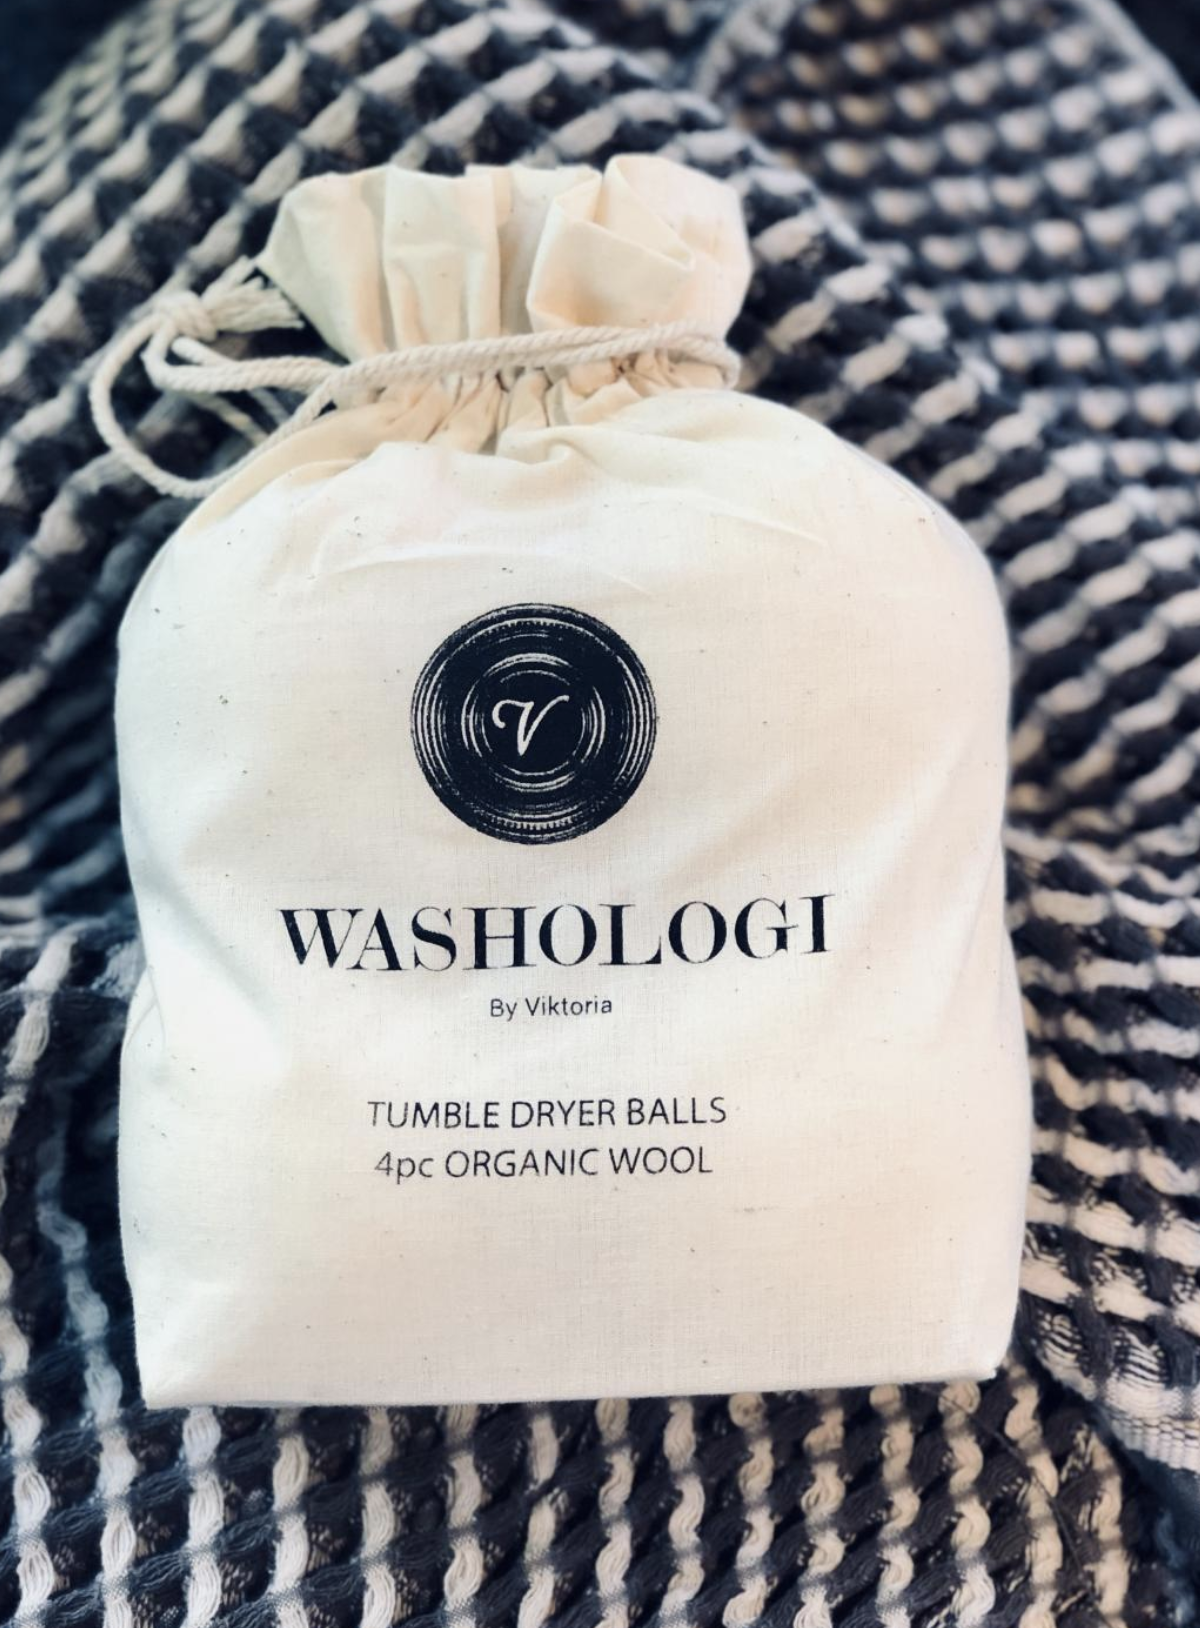 Tumble Dryer Balls from Washologi